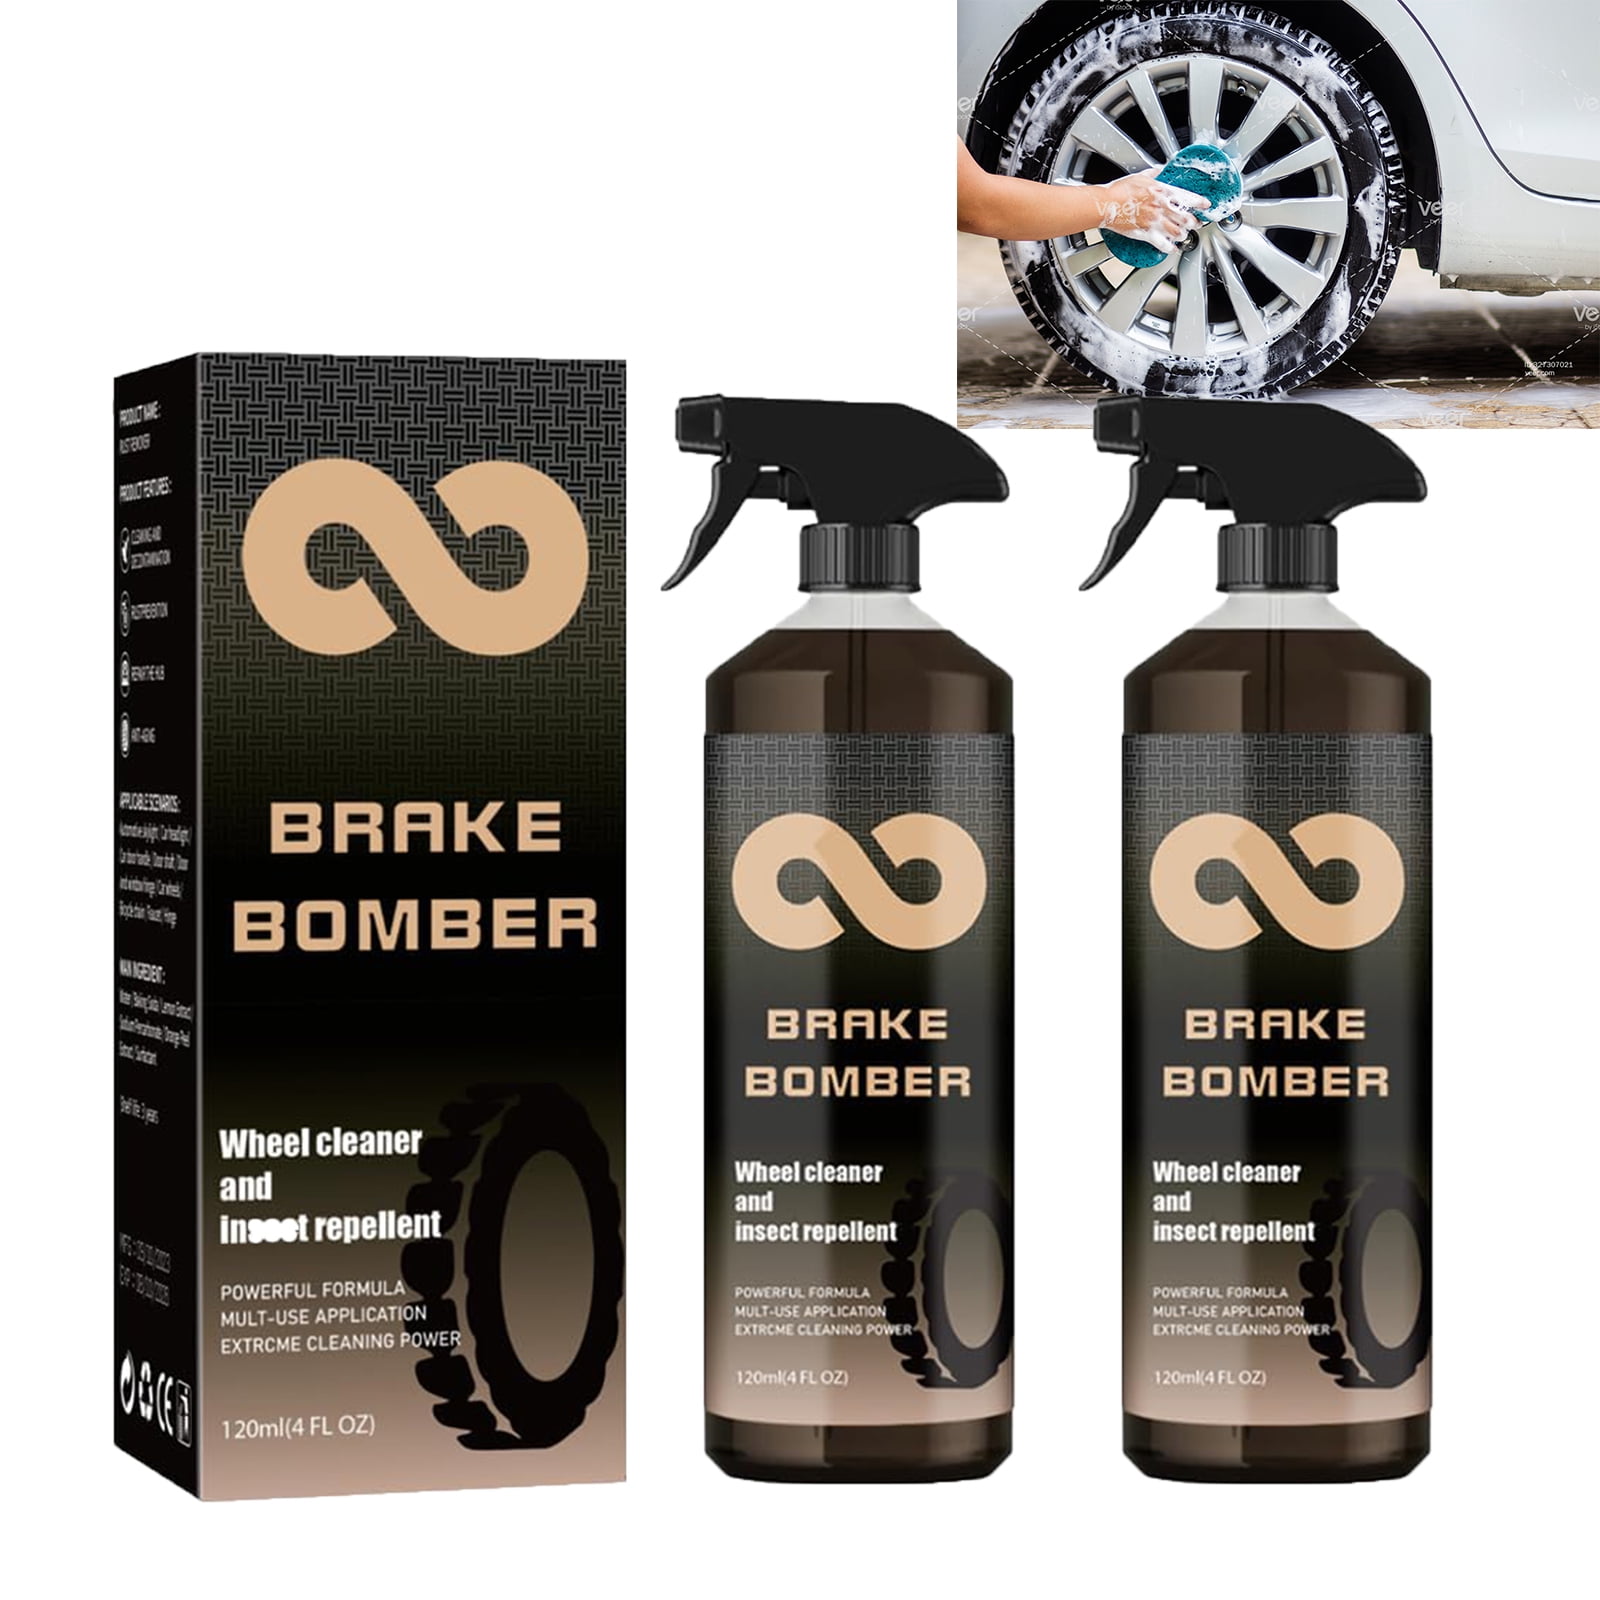 Stealth Garage Brake Bomber, Acid-free Wheel Cleaner Spray, Brake